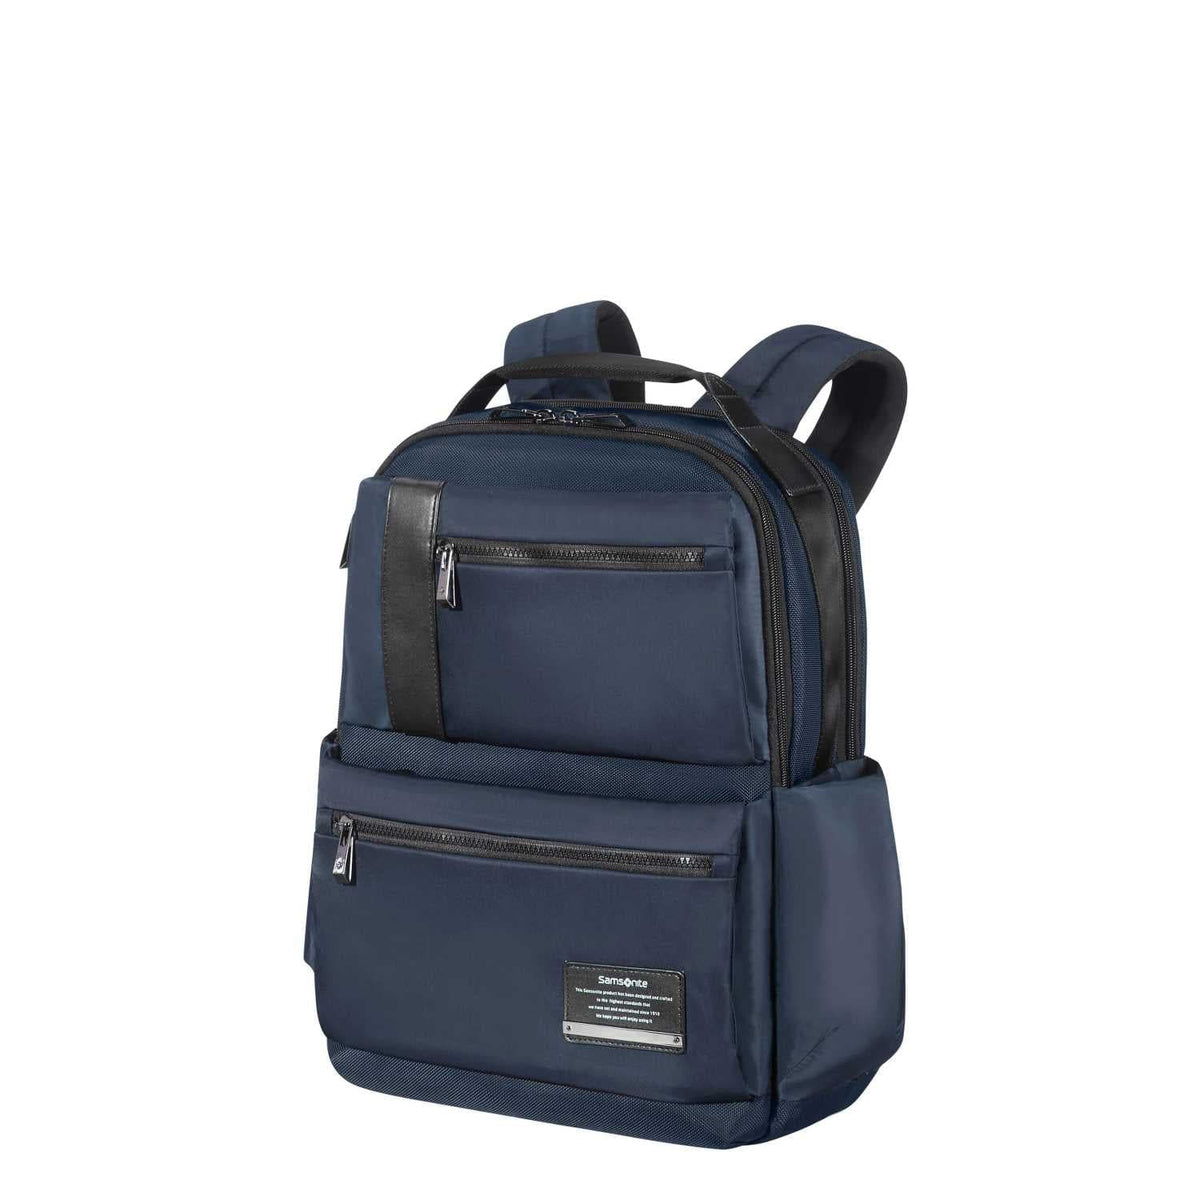 Samsonite Open Road 15.6" Laptop Backpack